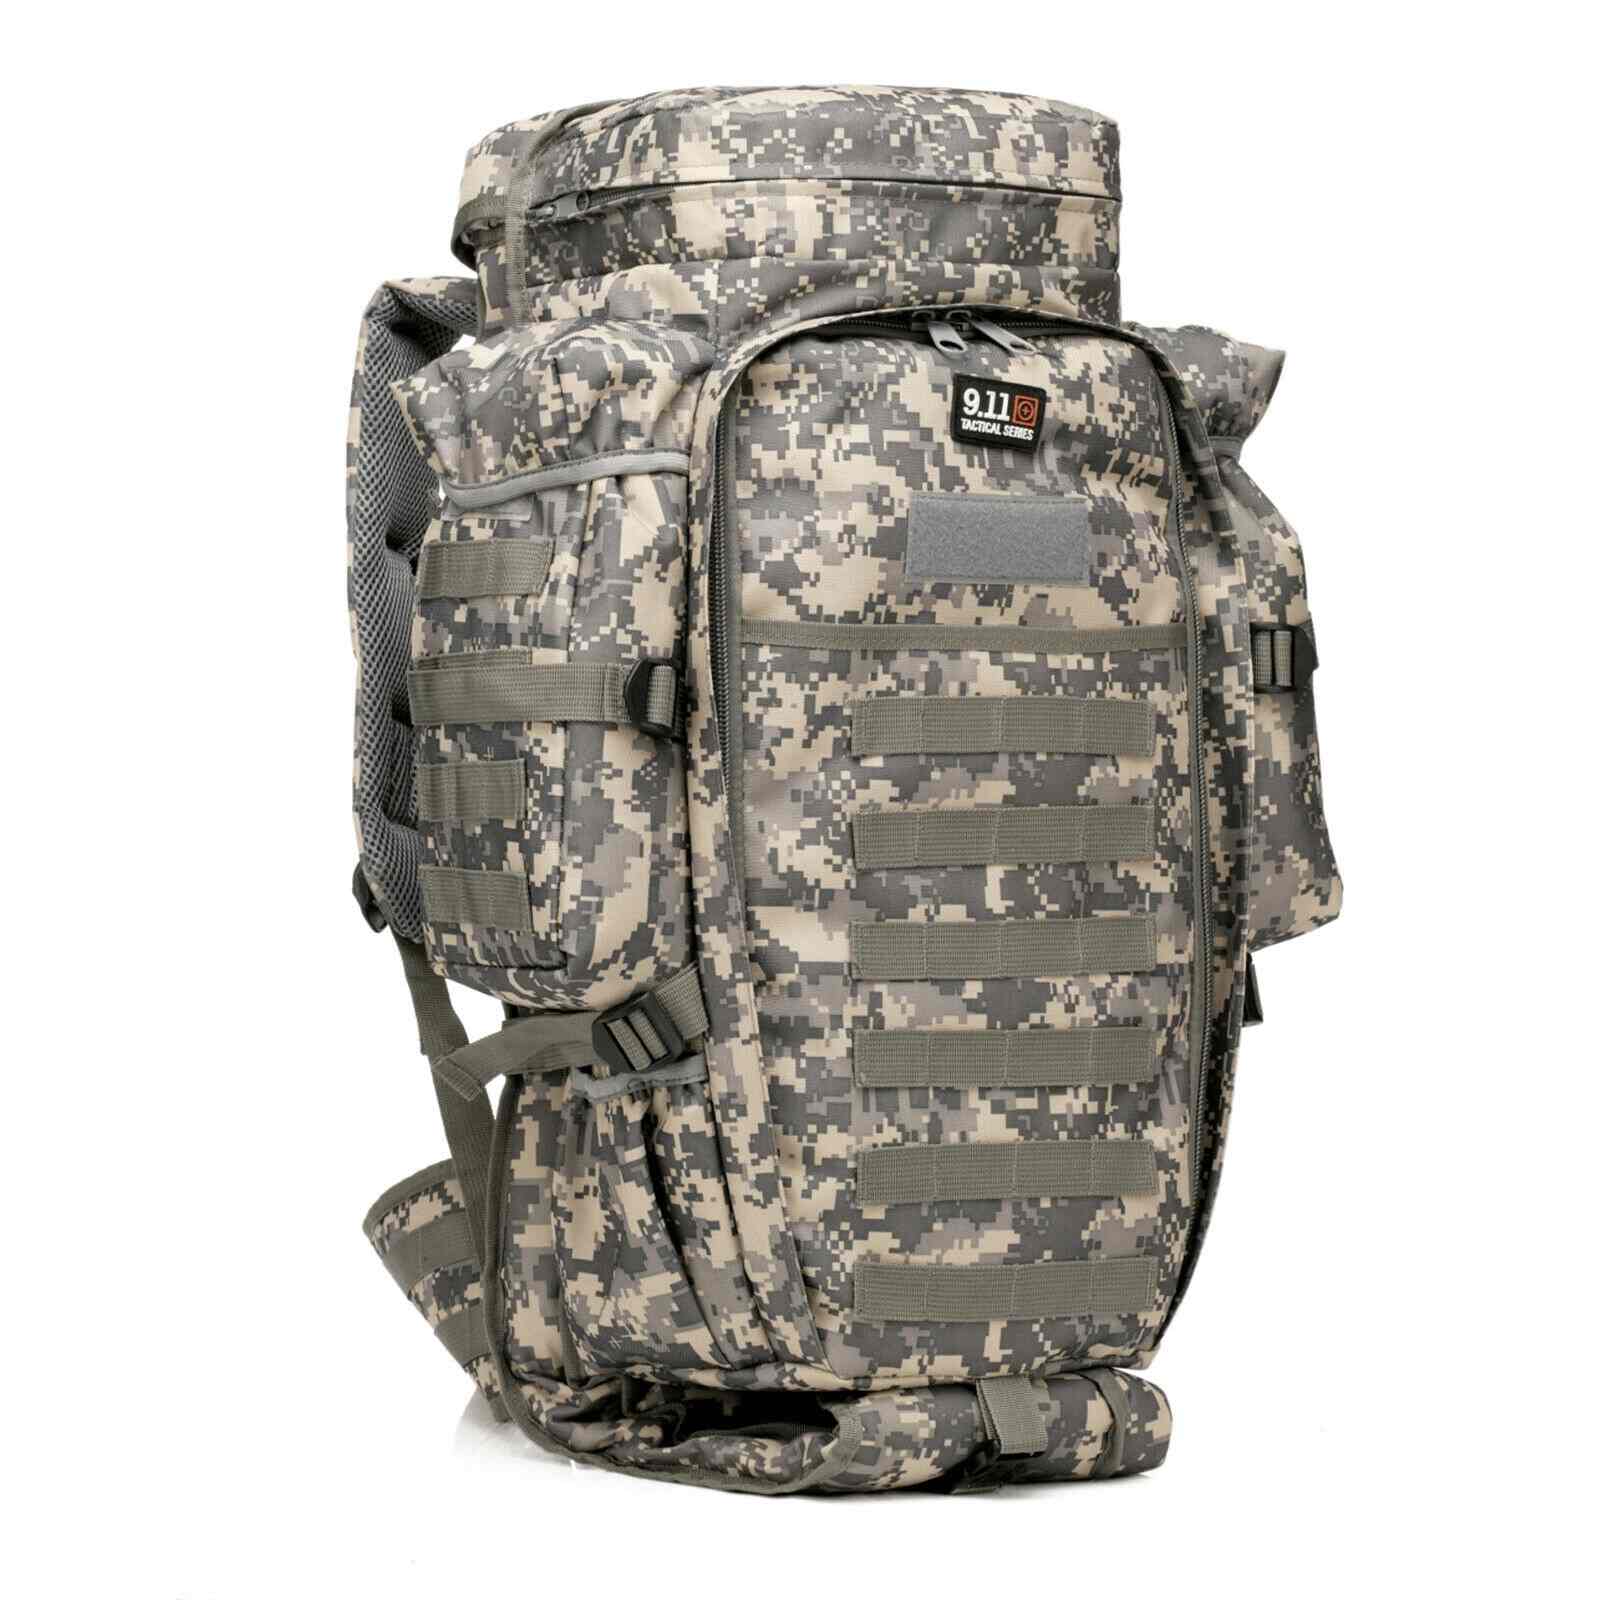 Gray 911 MOLLE Tactical Backpack Waterproof Hunting Bag